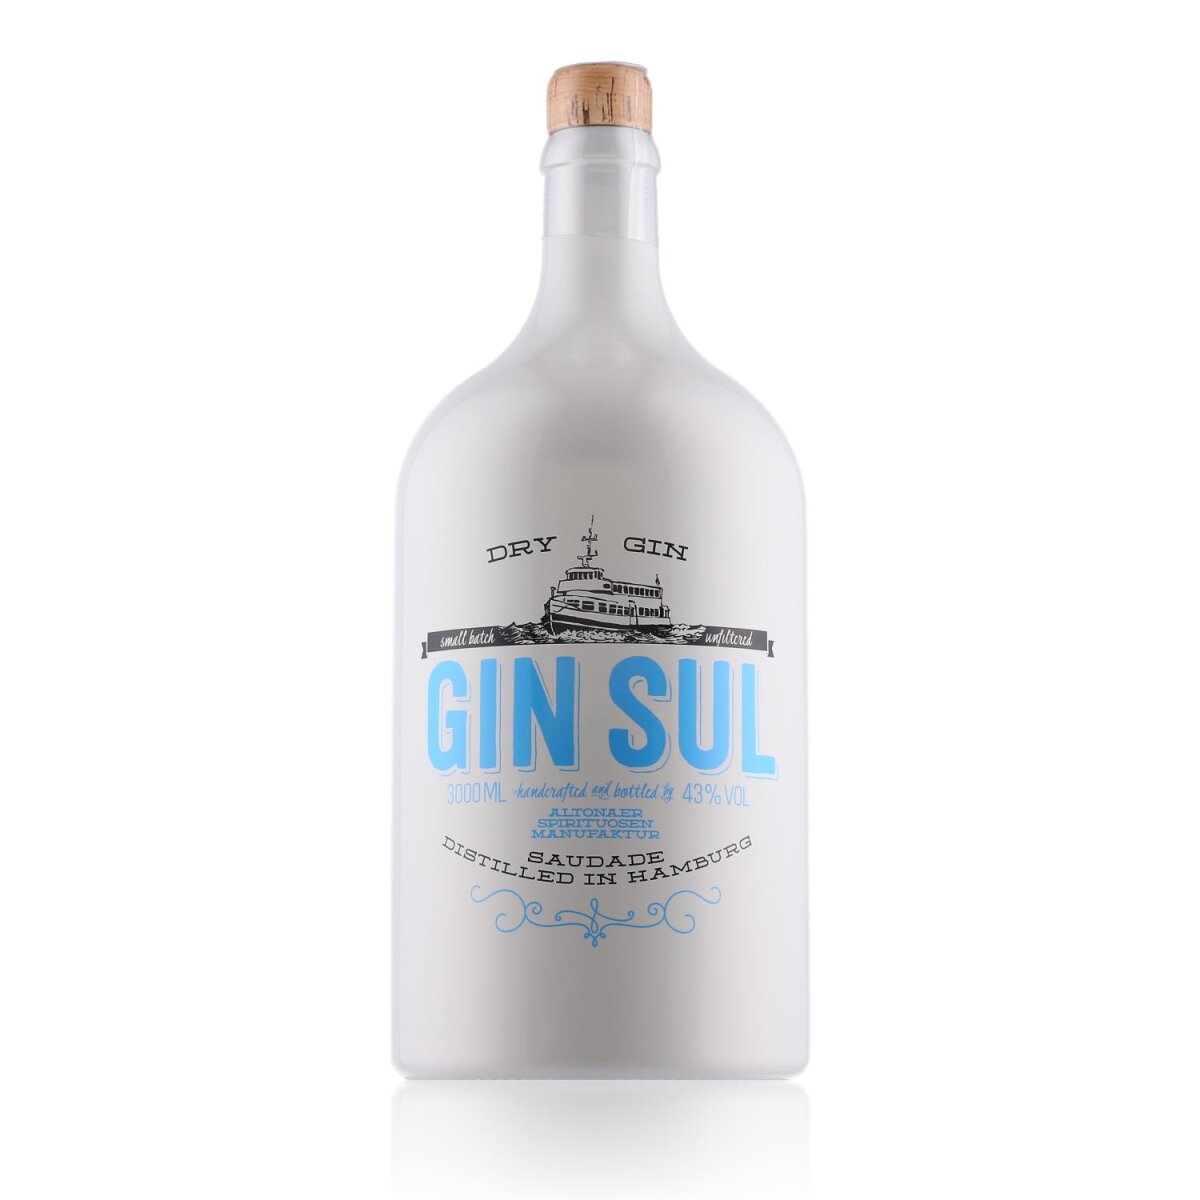 Gin Sul 211,19 3l, 43% € Dry Vol. Gin